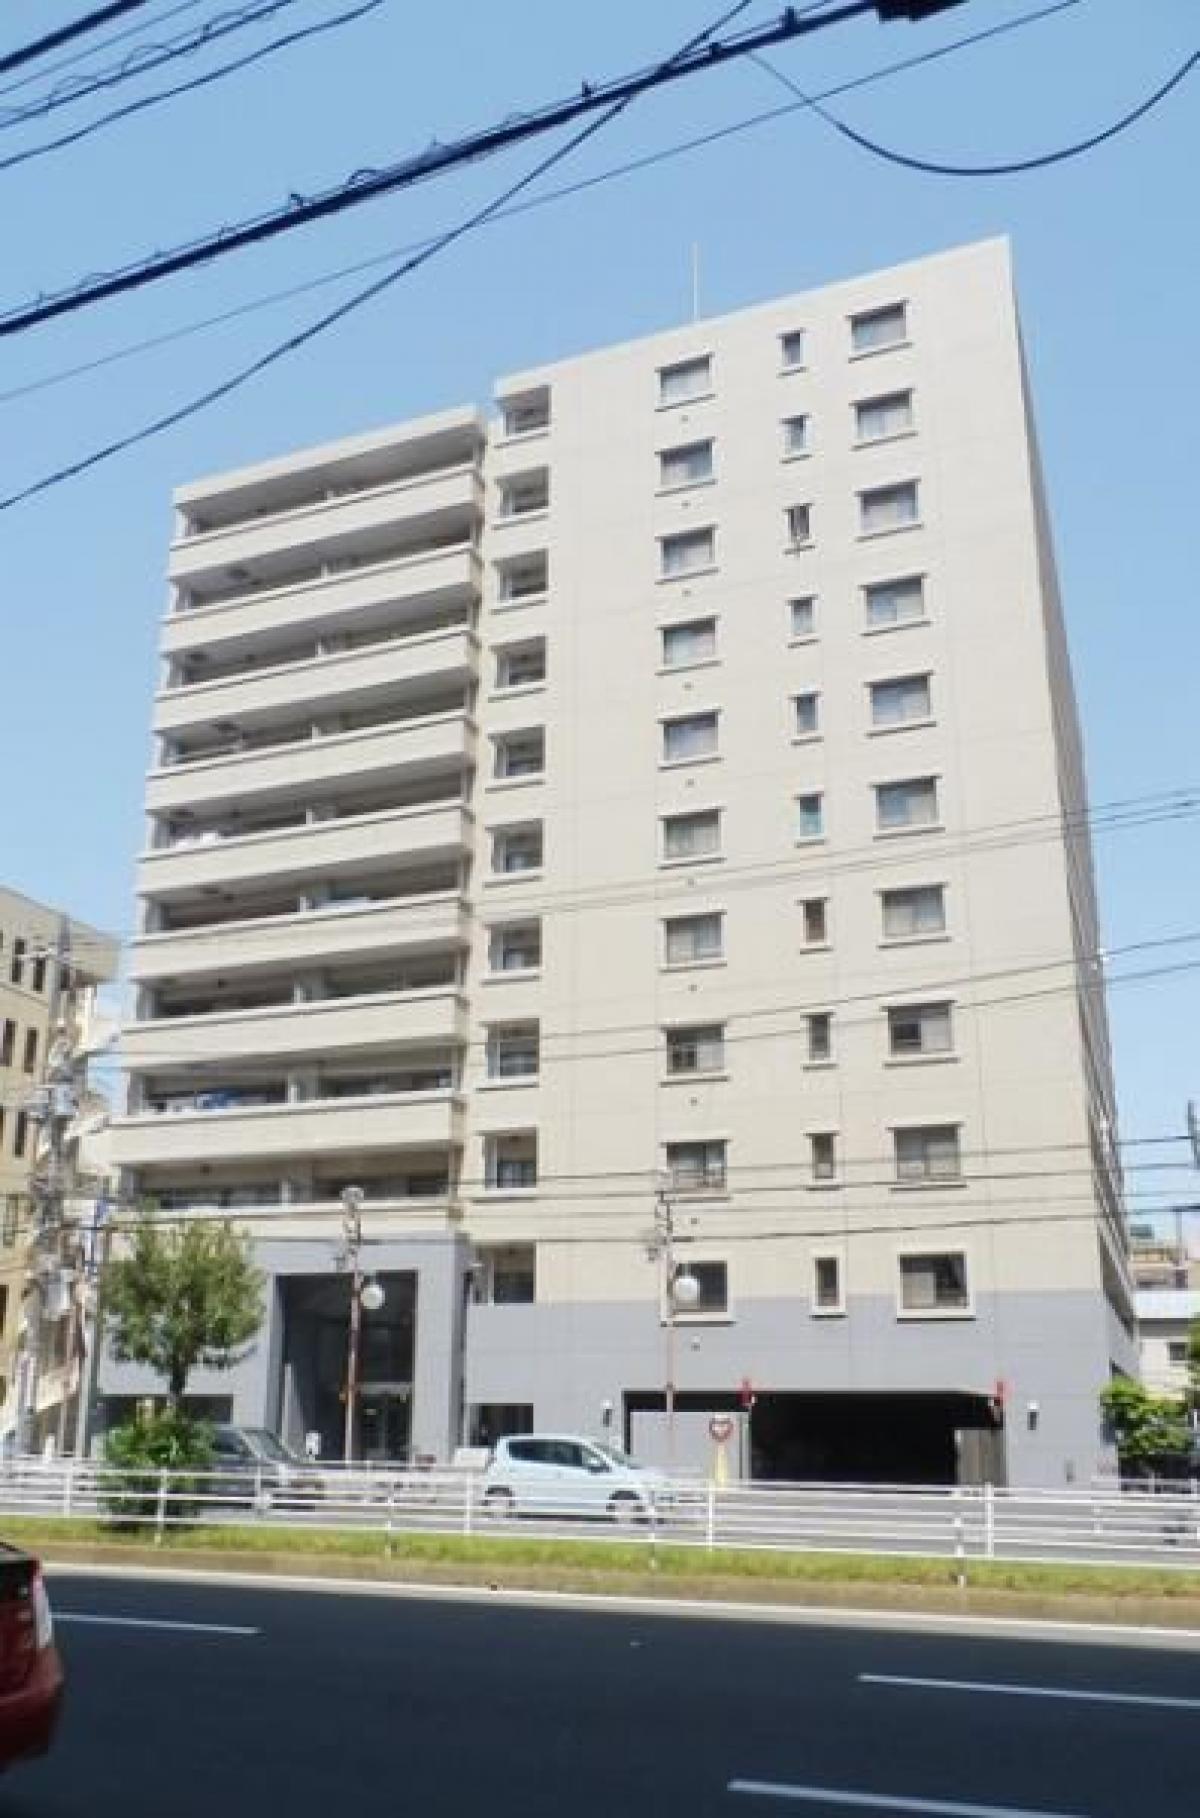 Picture of Apartment For Sale in Hiratsuka Shi, Kanagawa, Japan